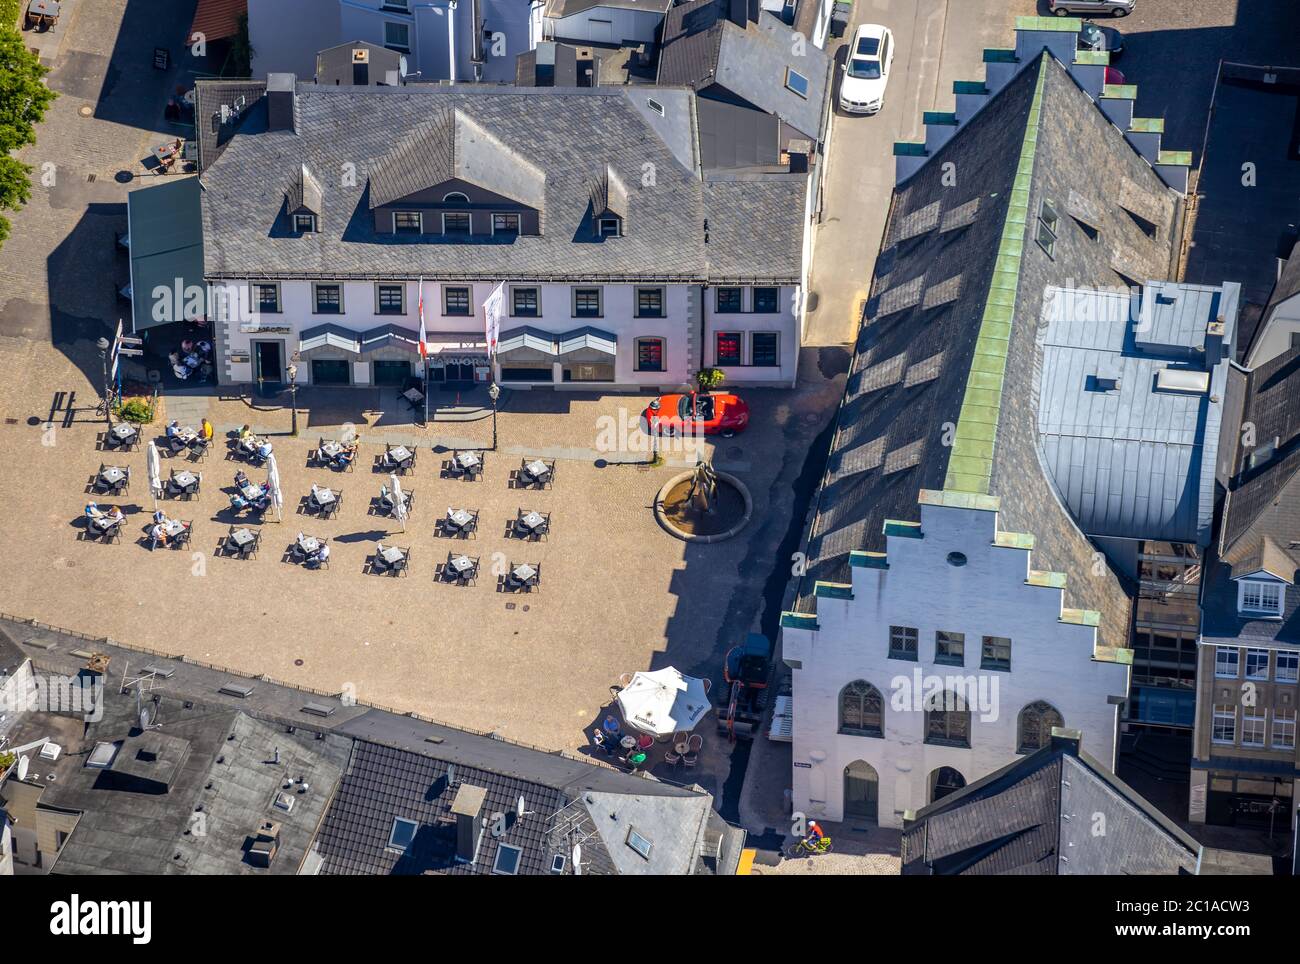 Aerial photograph, Alter Markt, gastronomy, Südsauerlandmuseum, Attendorn, Sauerland, North Rhine-Westphalia, Germany, outdoor gastronomy, corona cris Stock Photo